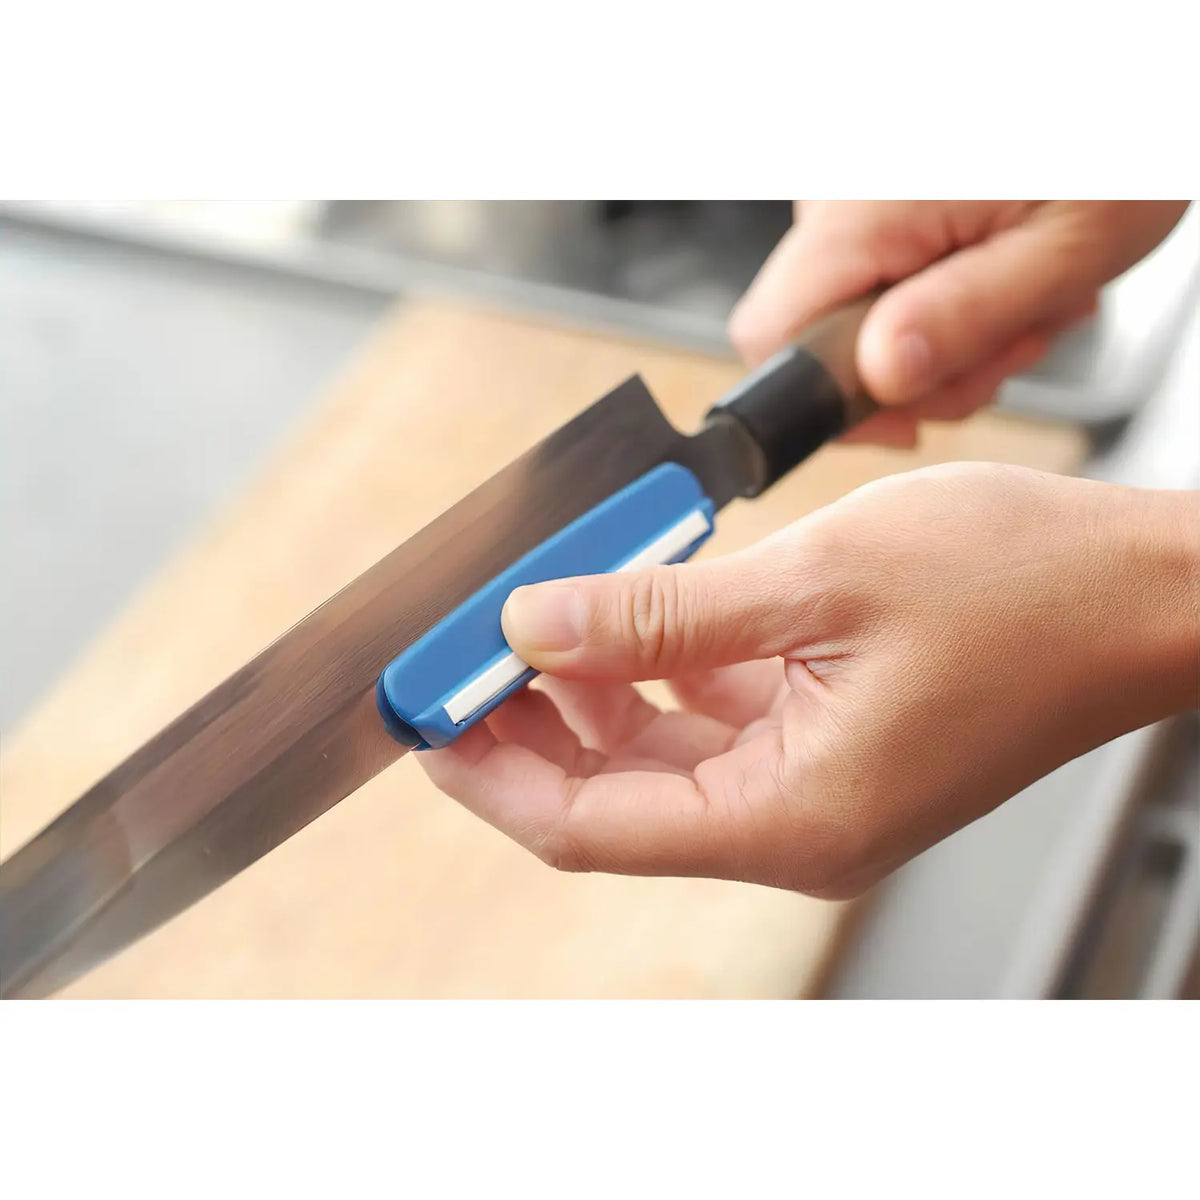 Japanese Sharpening Stone Whetstone Knife Sharpening Angle Guide Japanese  Kitchen Tool Made in Japan Kitchen Tool Made in Japan 